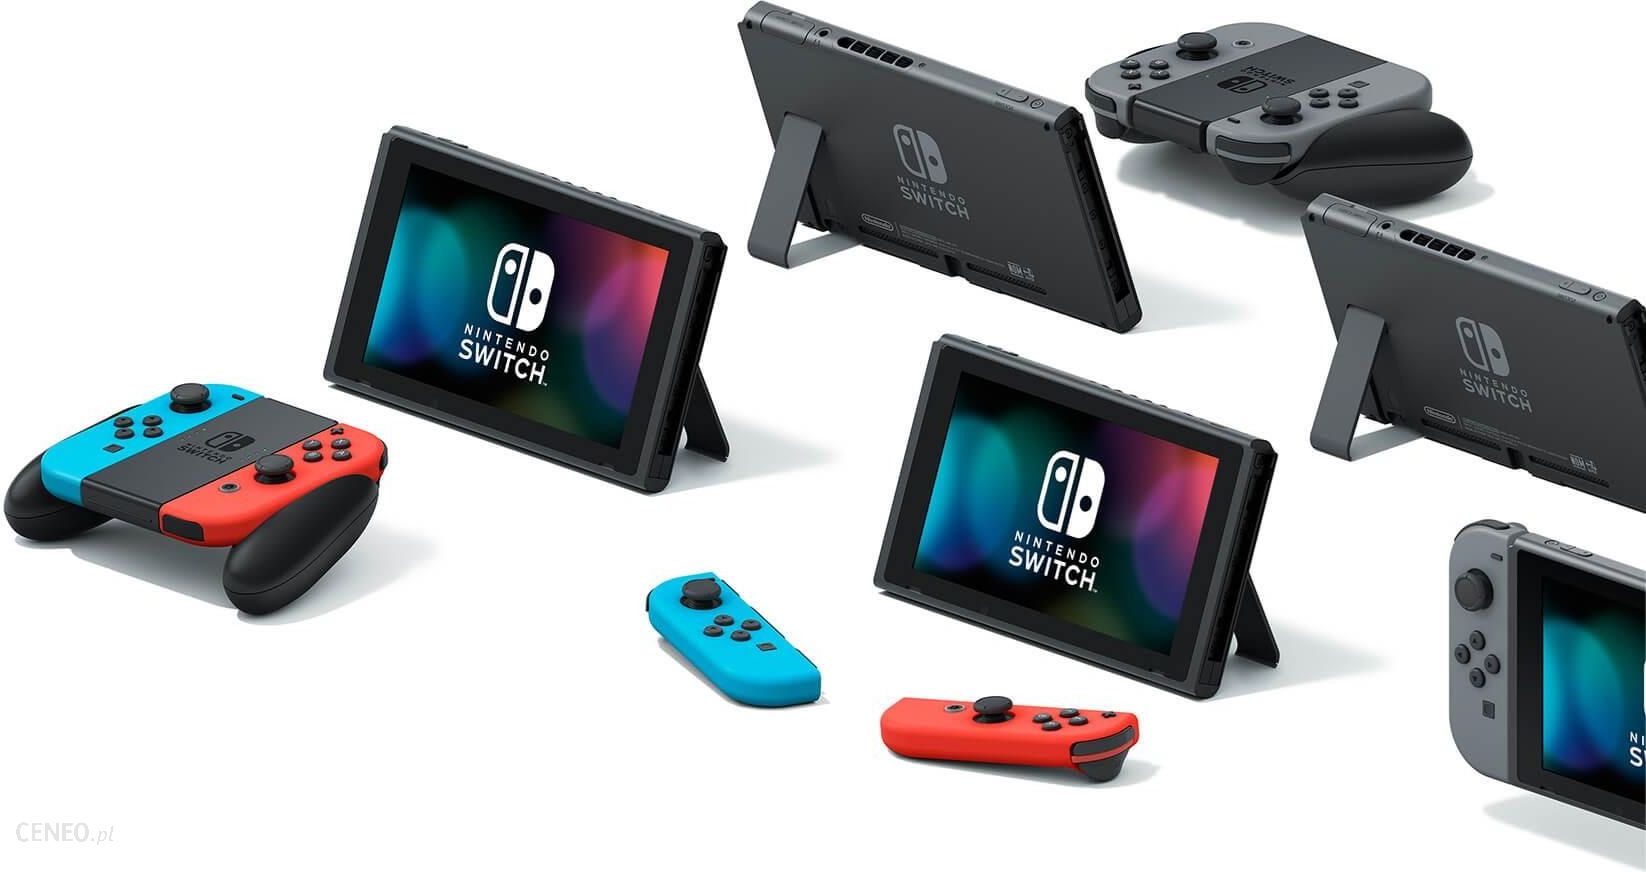 Nintendo SWITCH Neon Red & Blue Joy-Con (2019)